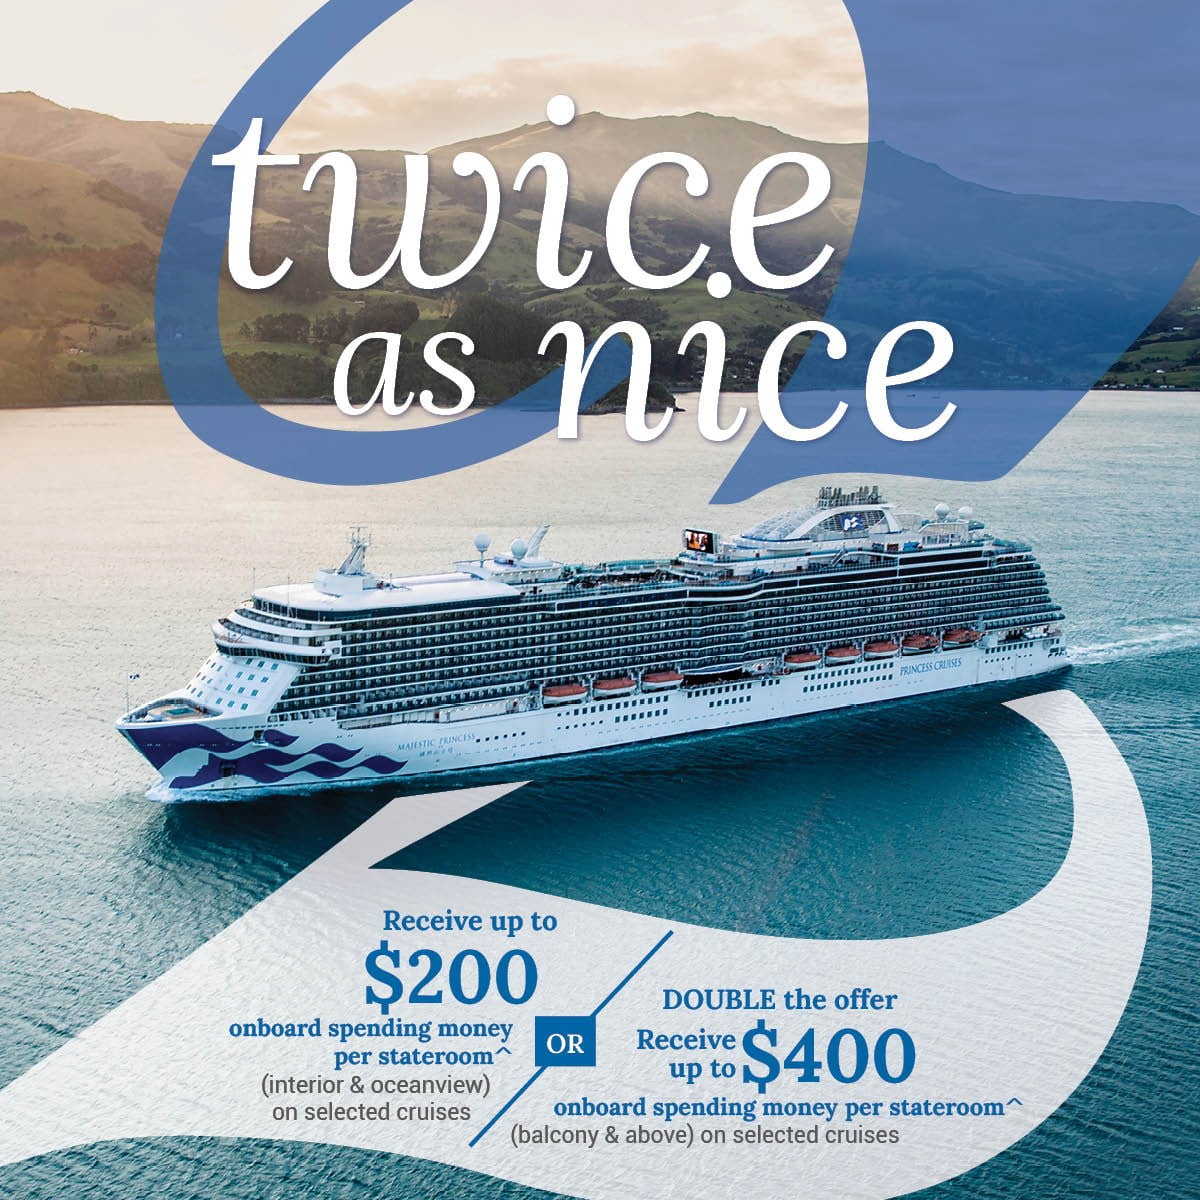 Princess Cruise’s Twice as Nice Promotion – Cruise Company